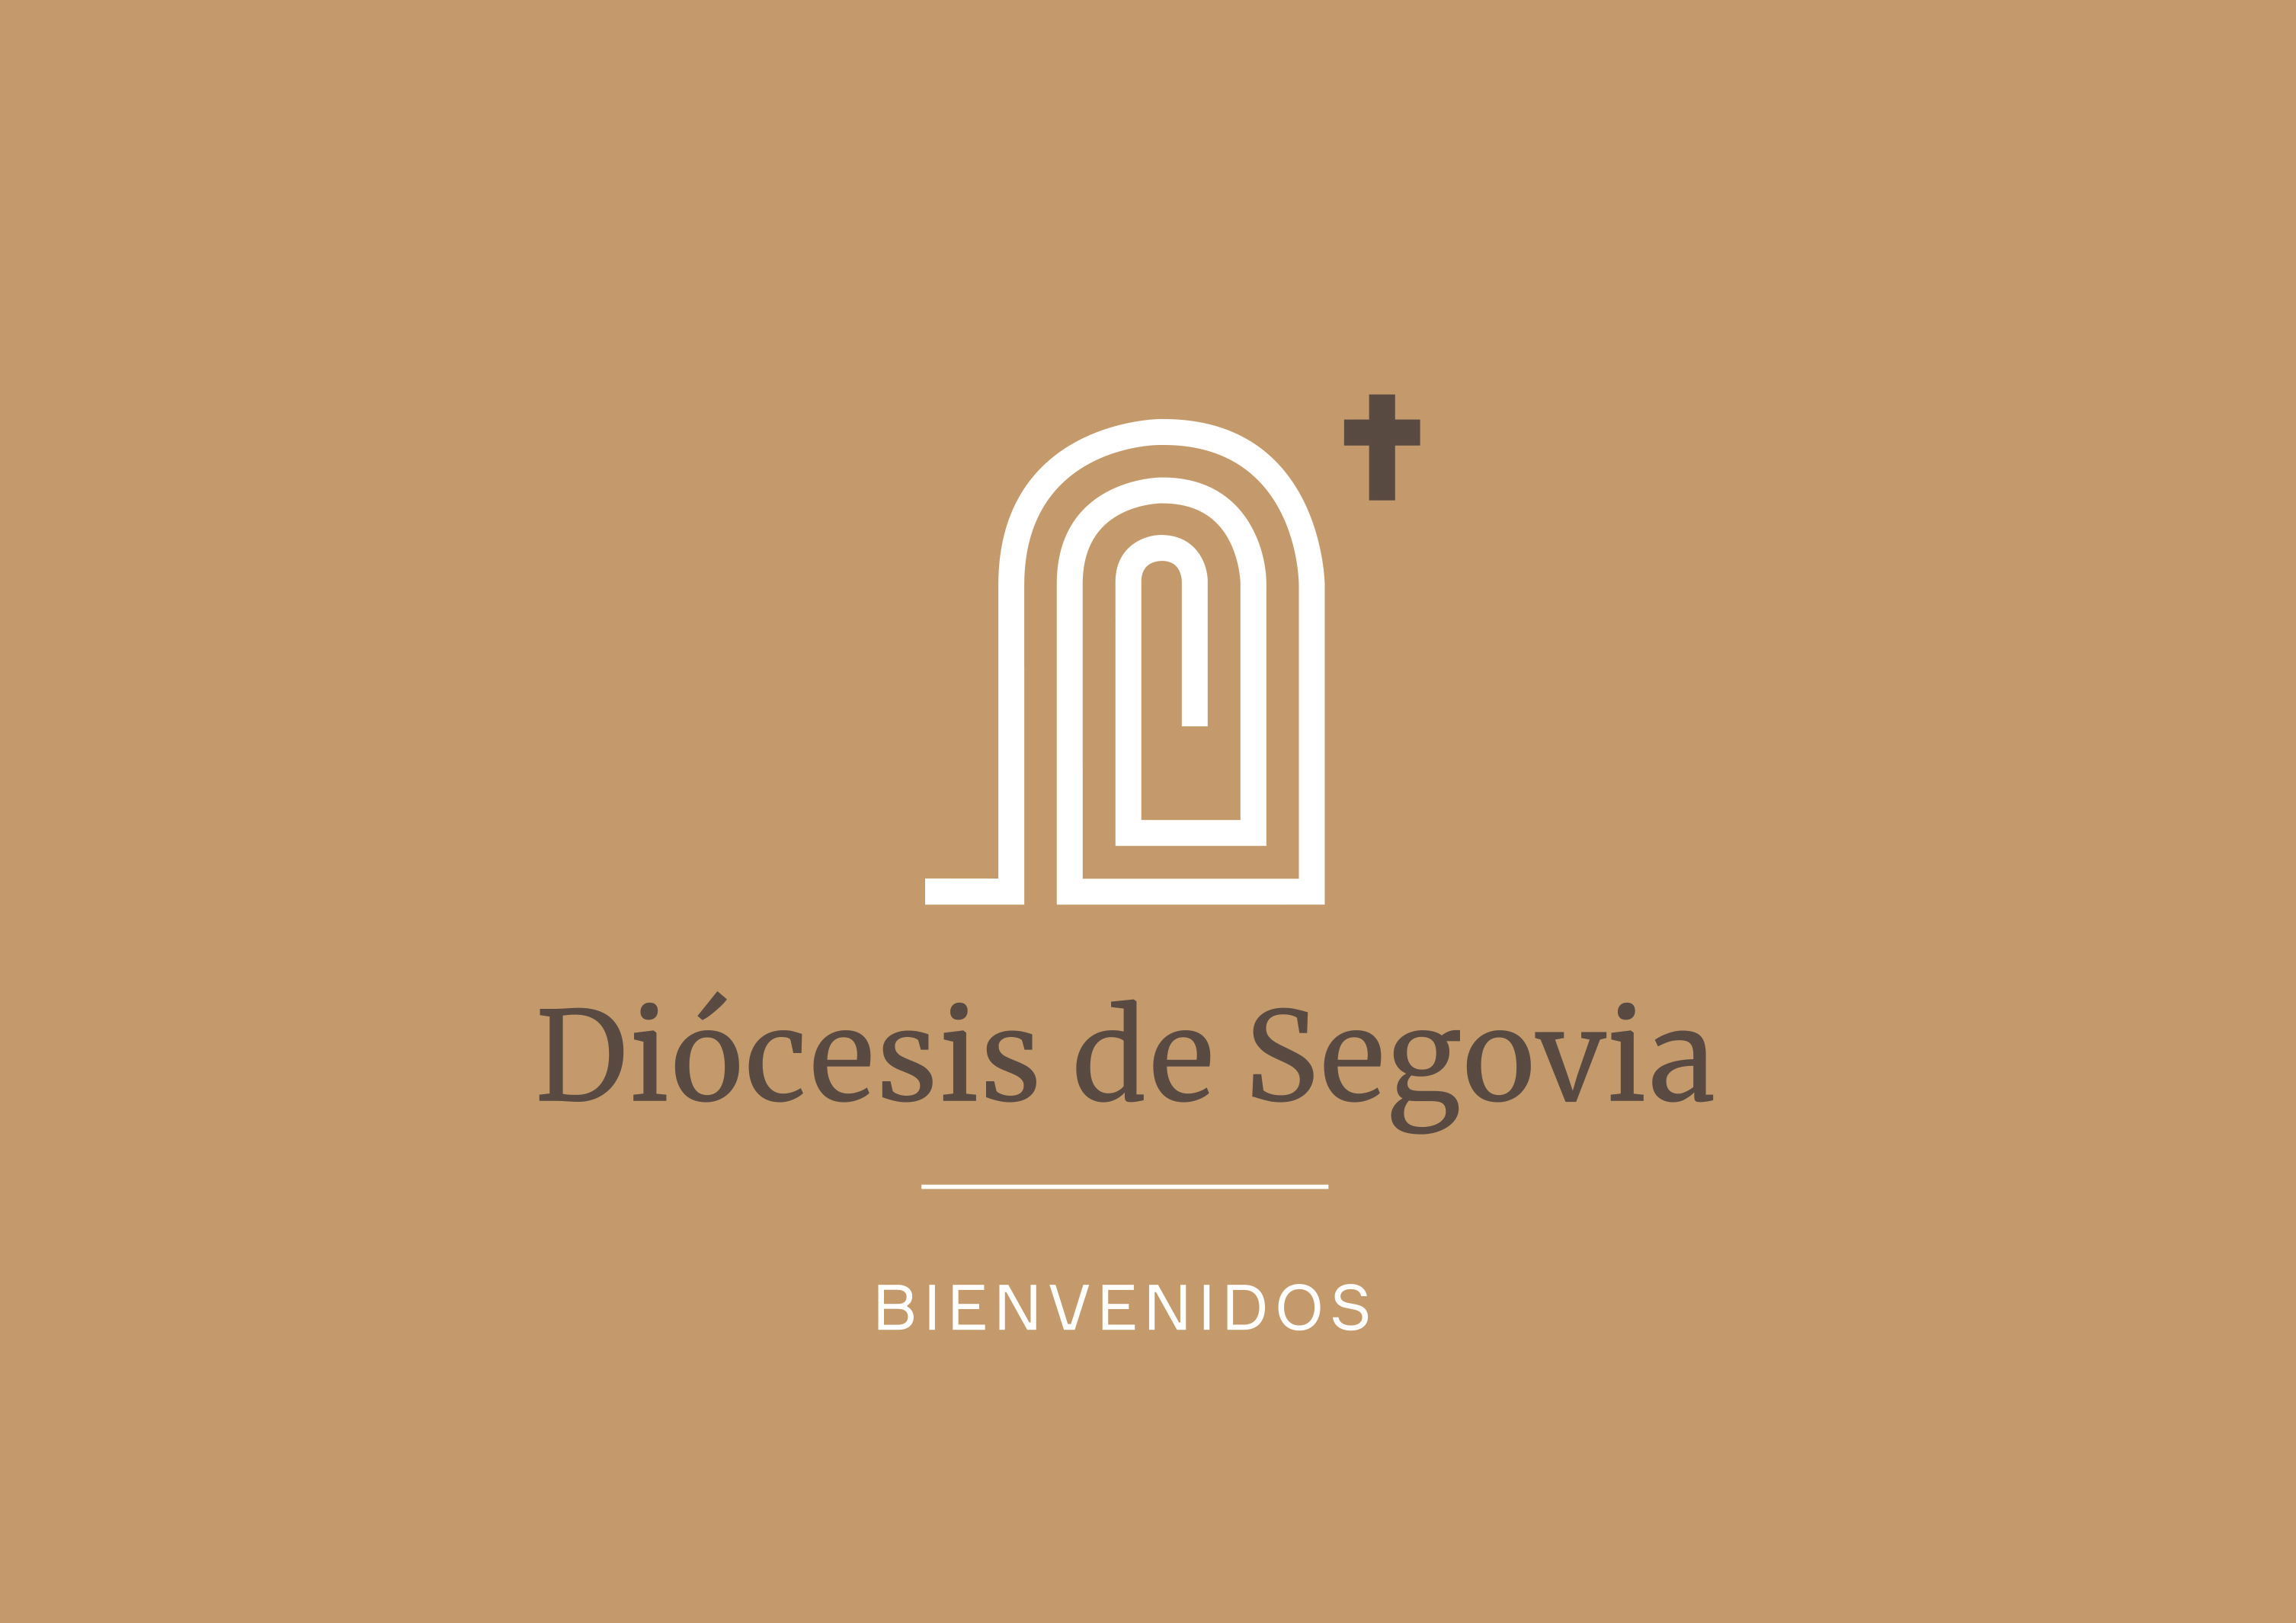 LOGOTIPO DIOCESIS DE SEGOVIA 2